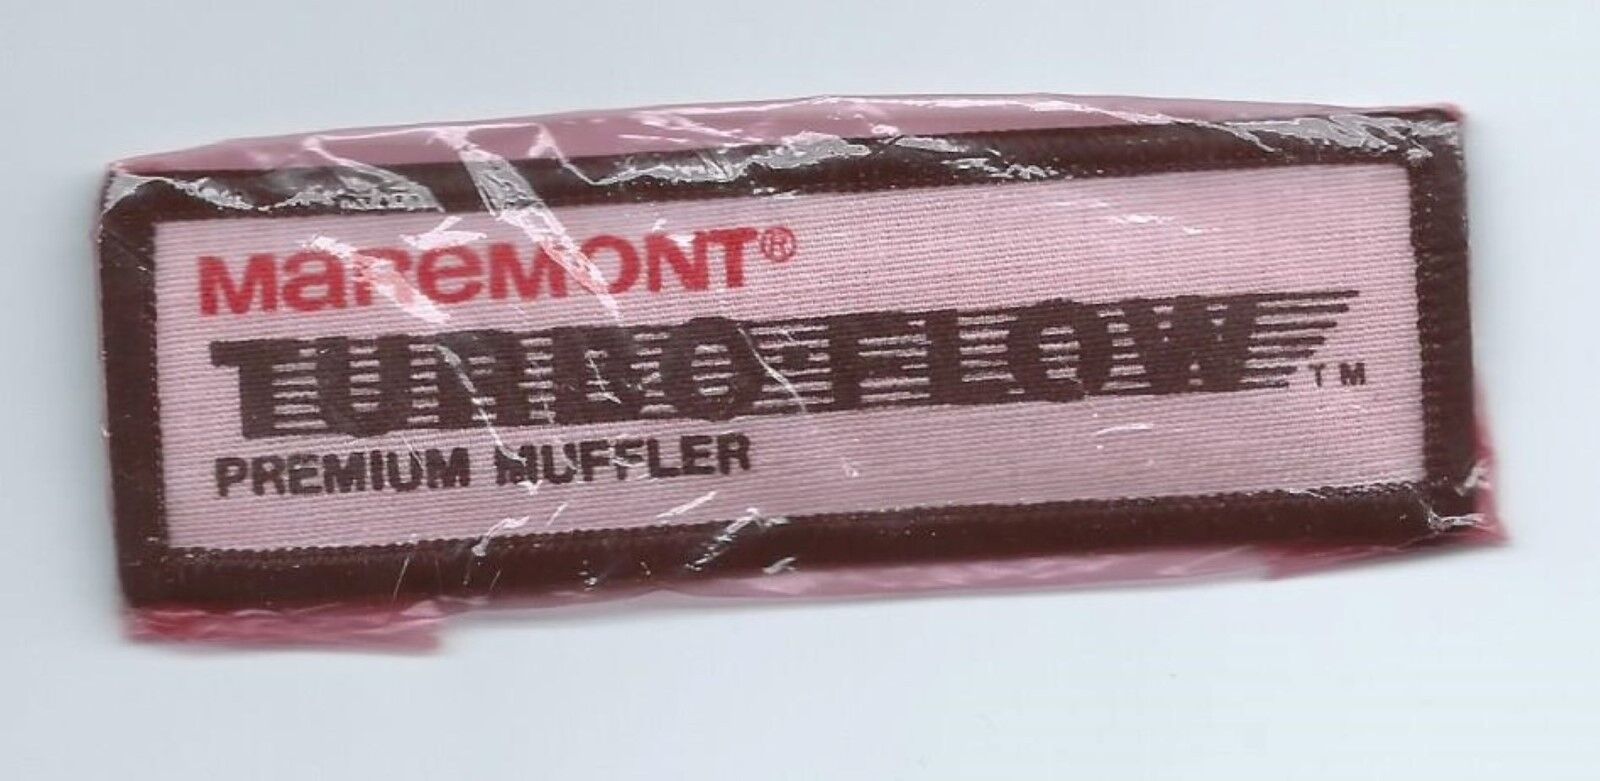 Maremont Turbo flow premium muffler advertising patch 1-1/4 X 4